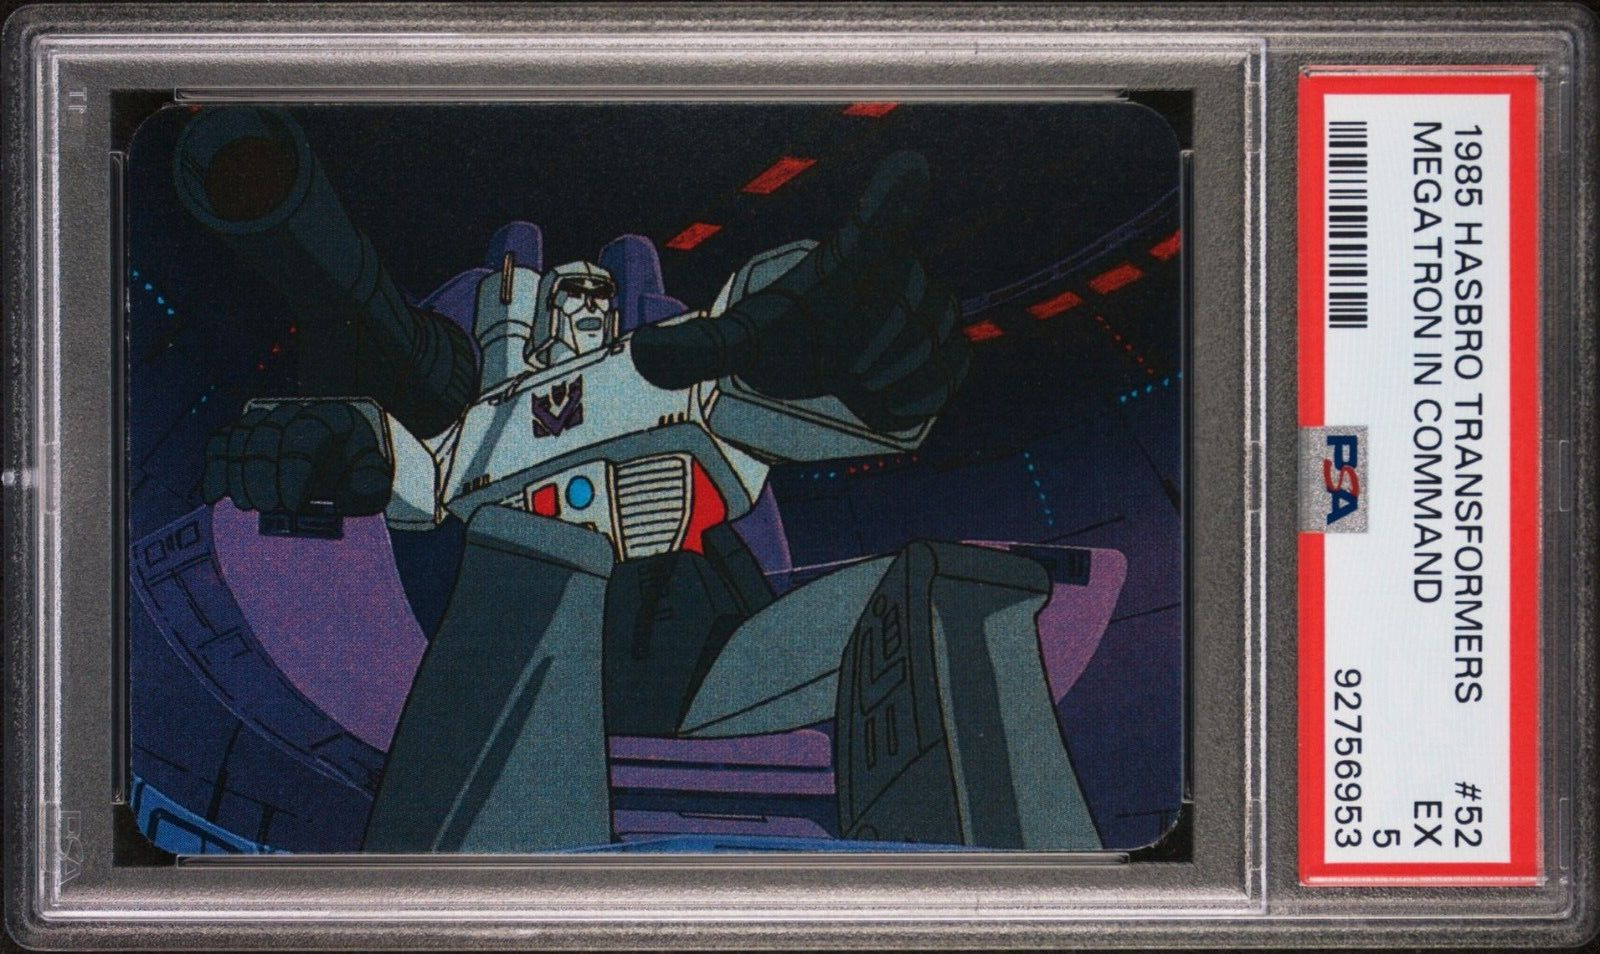 1985 Hasbro Transformers #52 Megatron in Command PSA 5